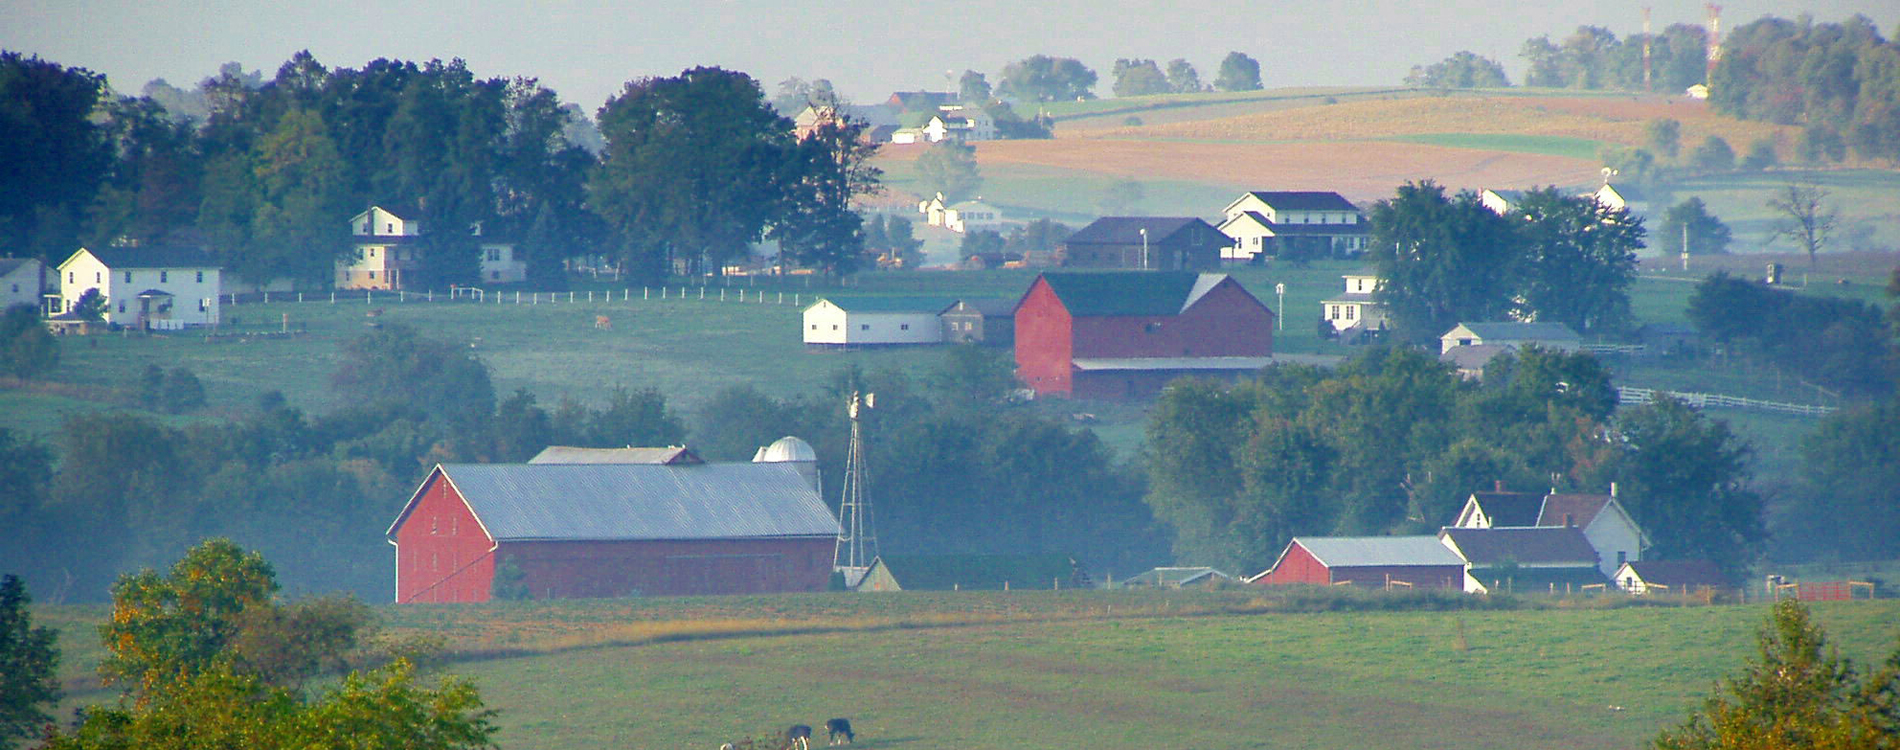 Amish Country, OH - Amish Farmland near Mount Eaton Ohio